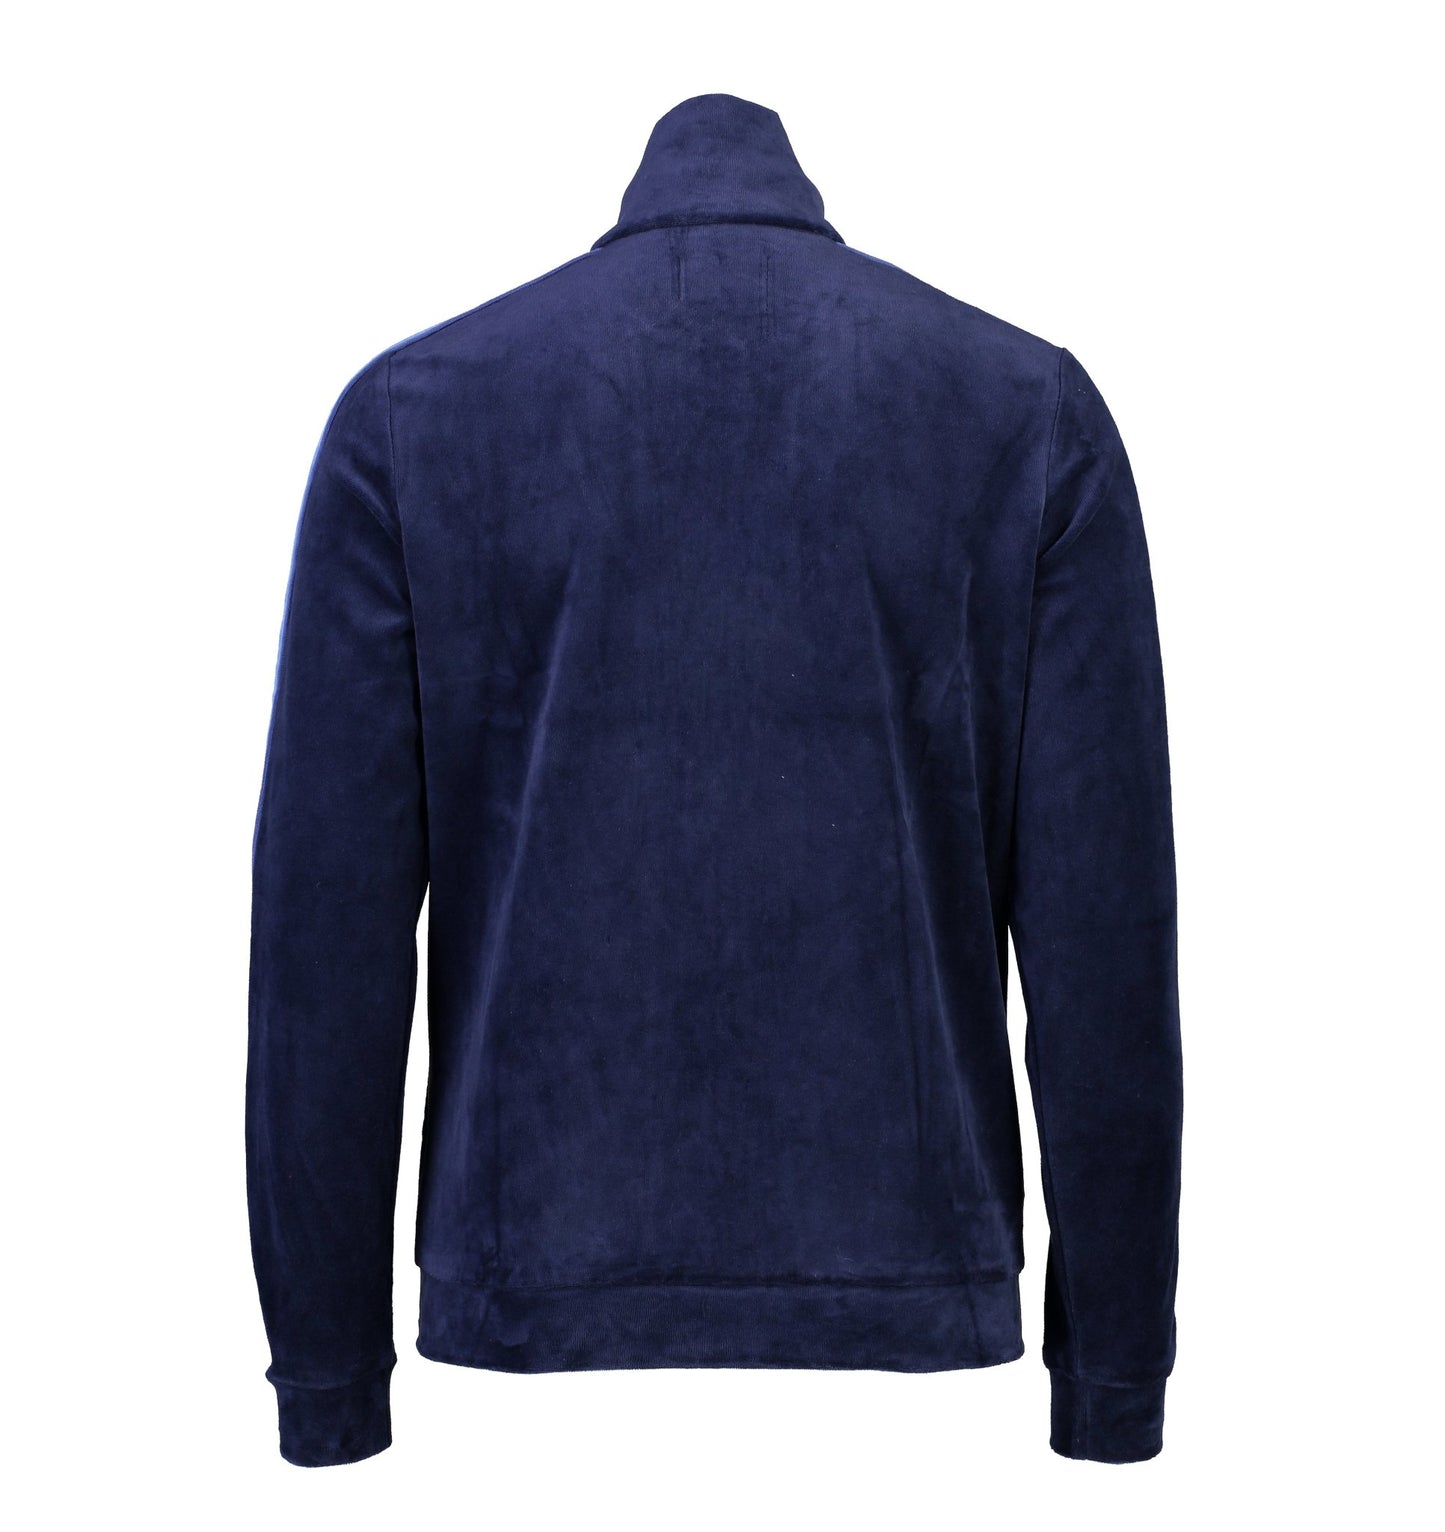 Velour Jogging Jacket (Ink/Cornflower Blue) - Sweepstake Winners™